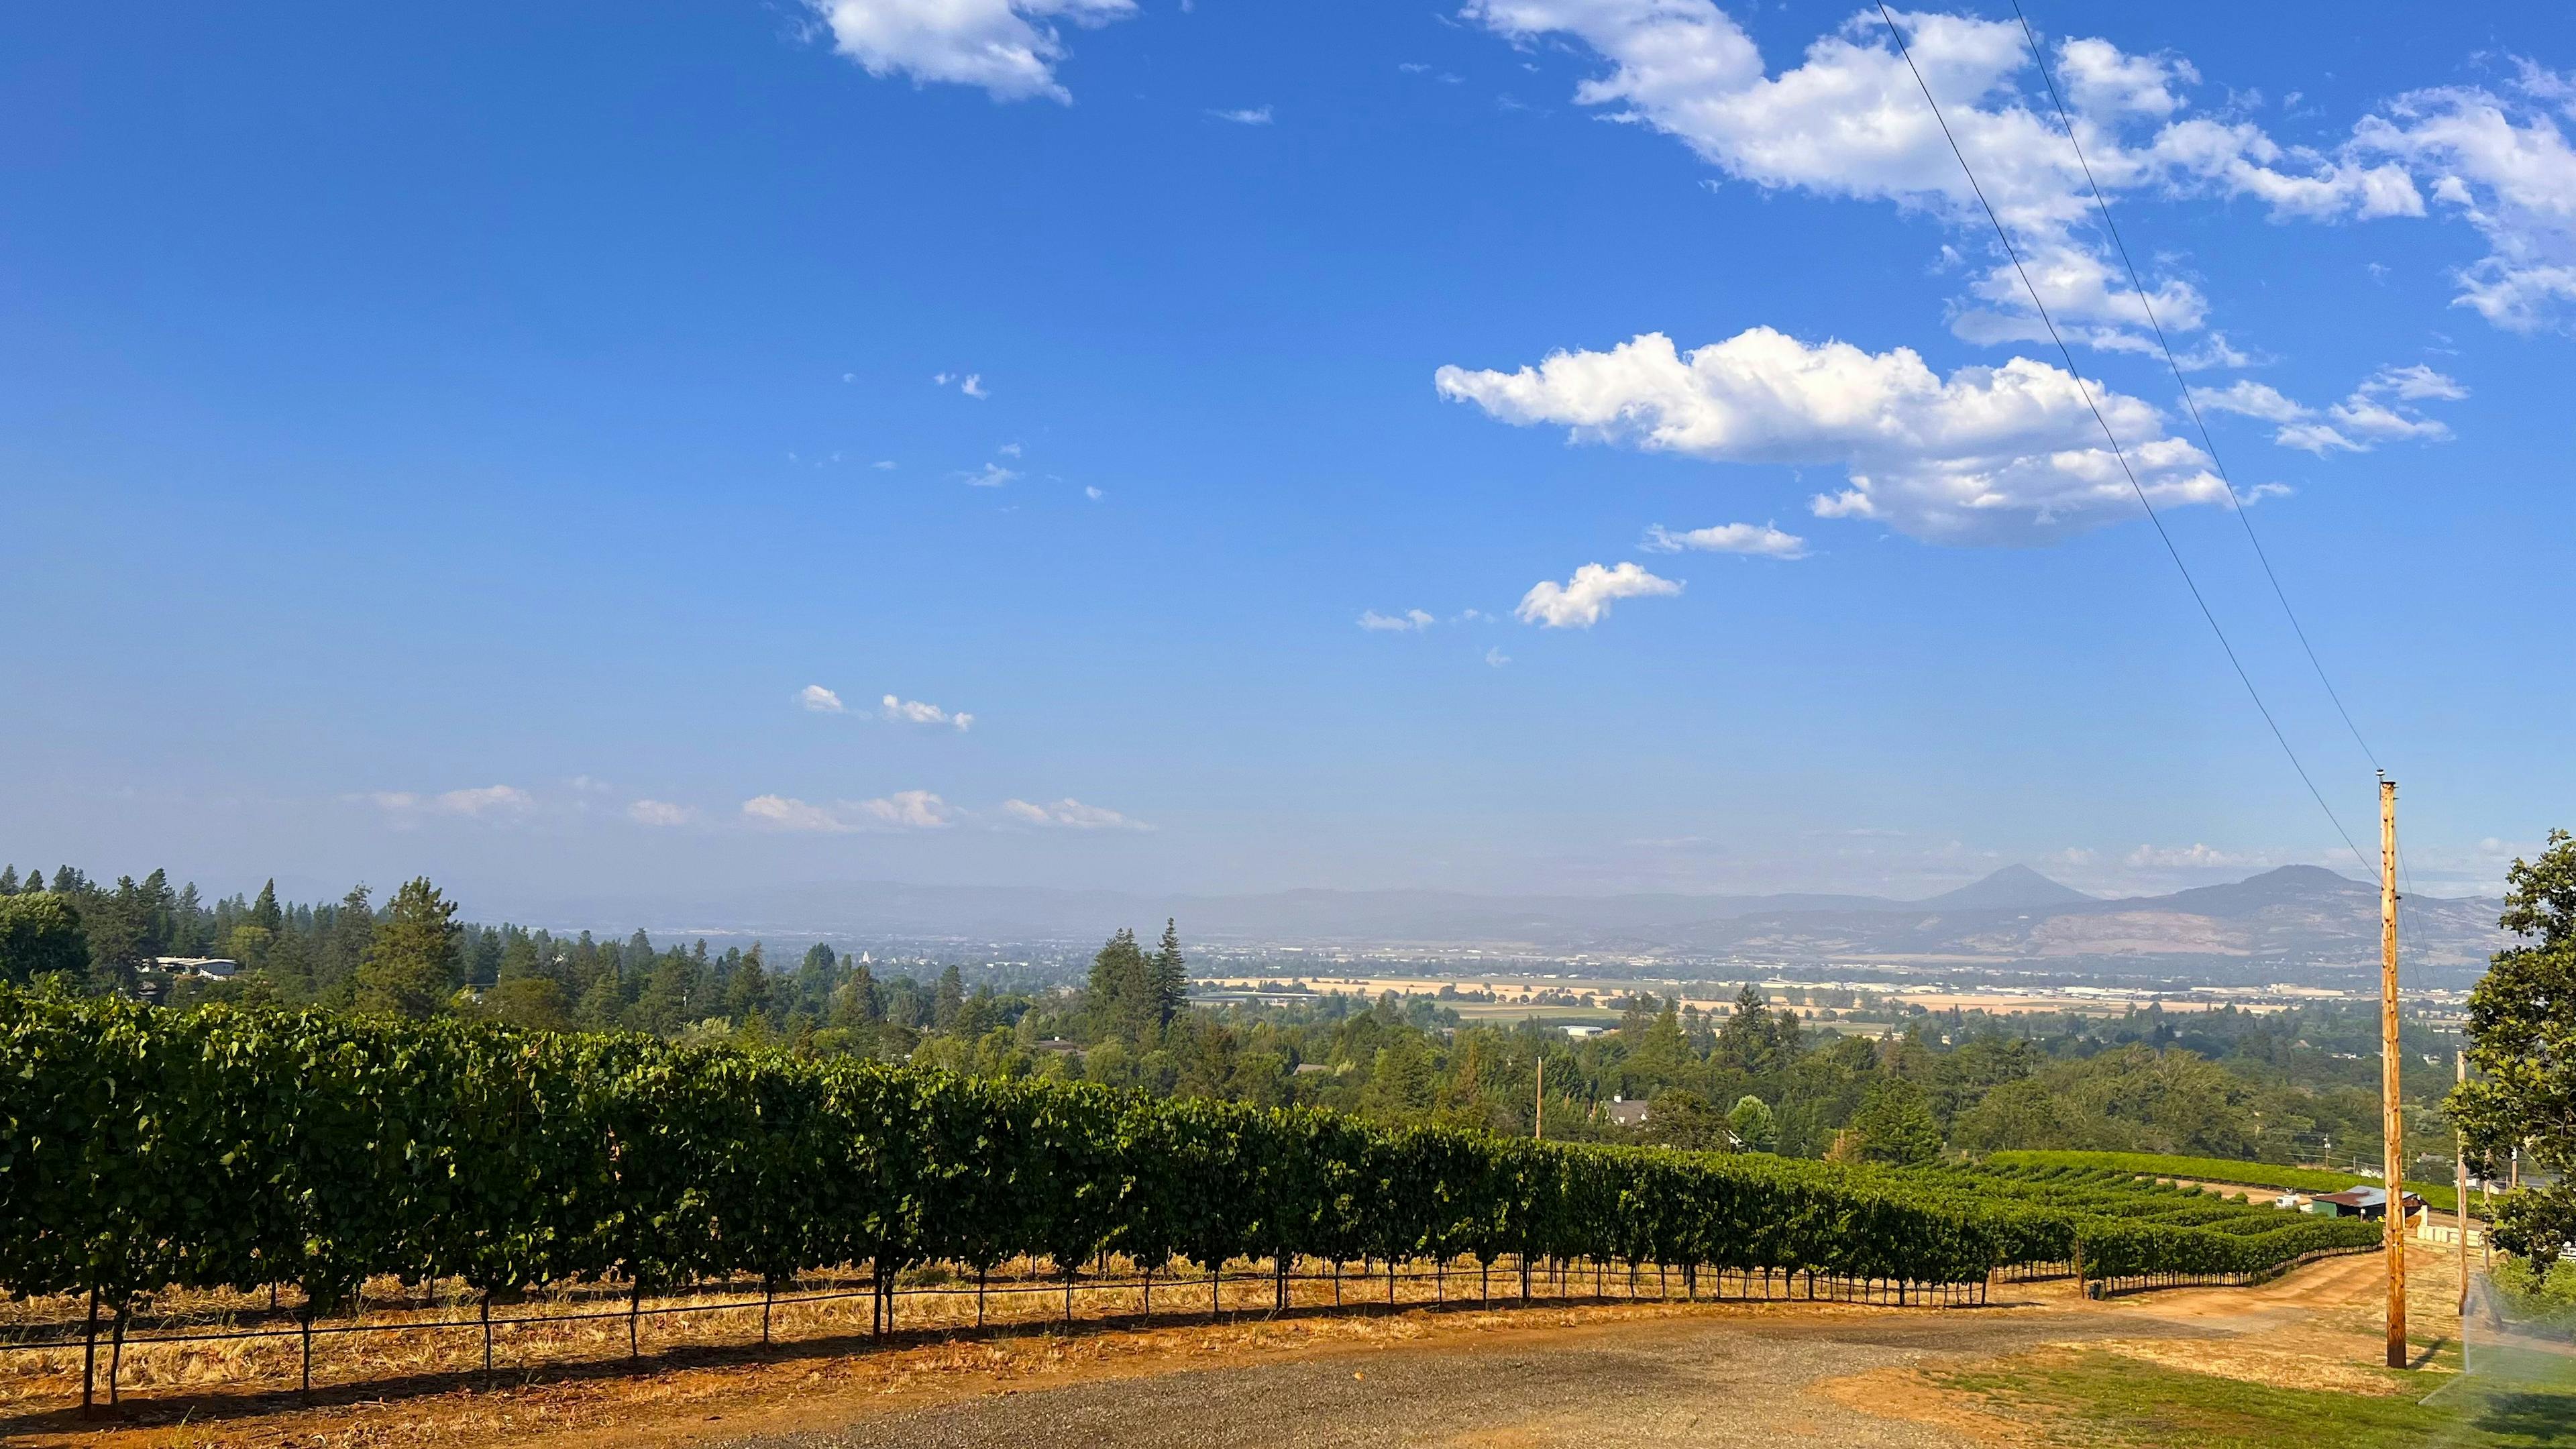 Wine Tasting in the Heart of Southern Oregon Wine Region